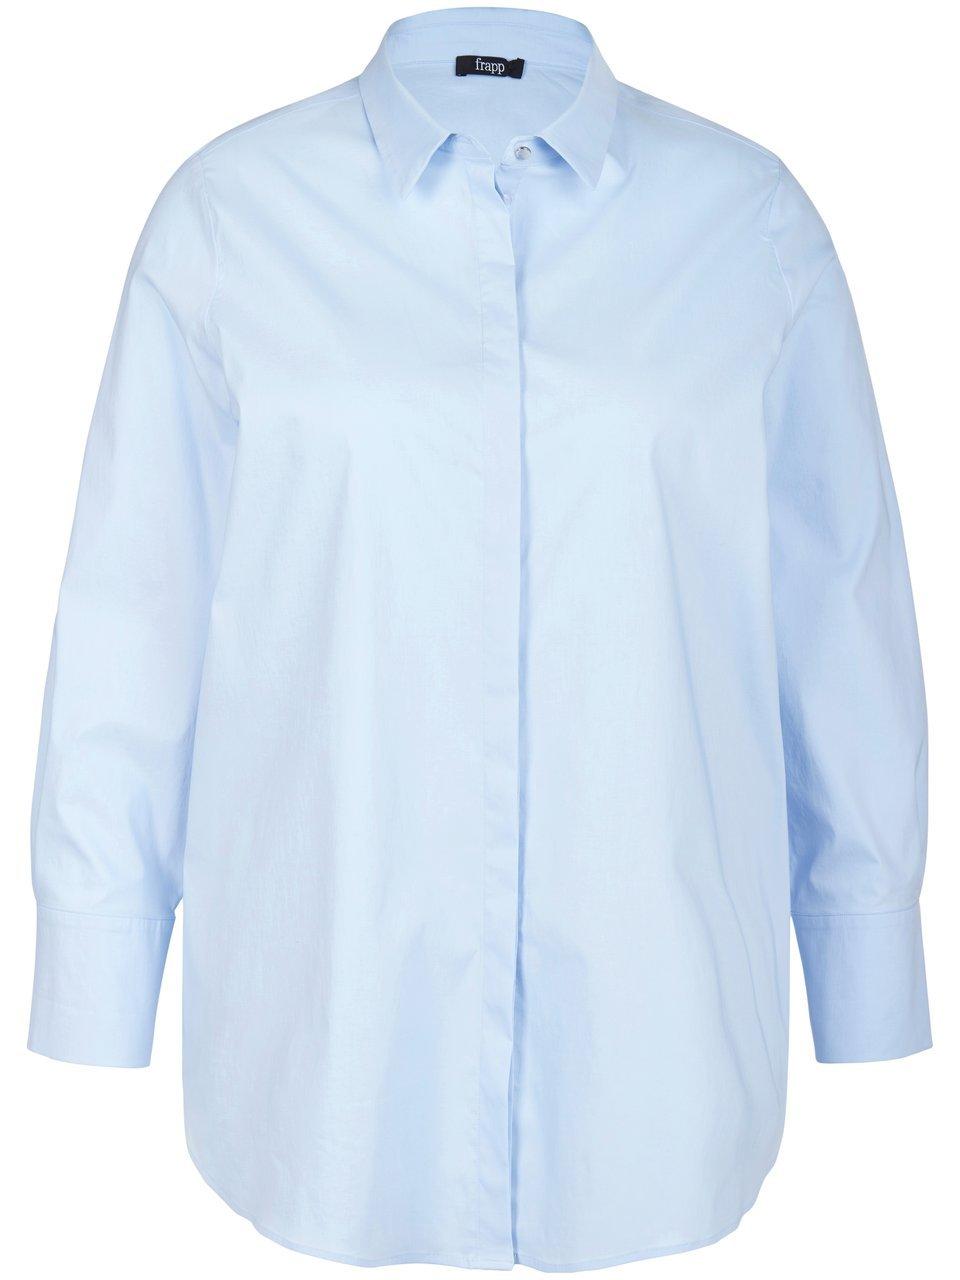 Lange blouse lange mouwen Van frapp blauw